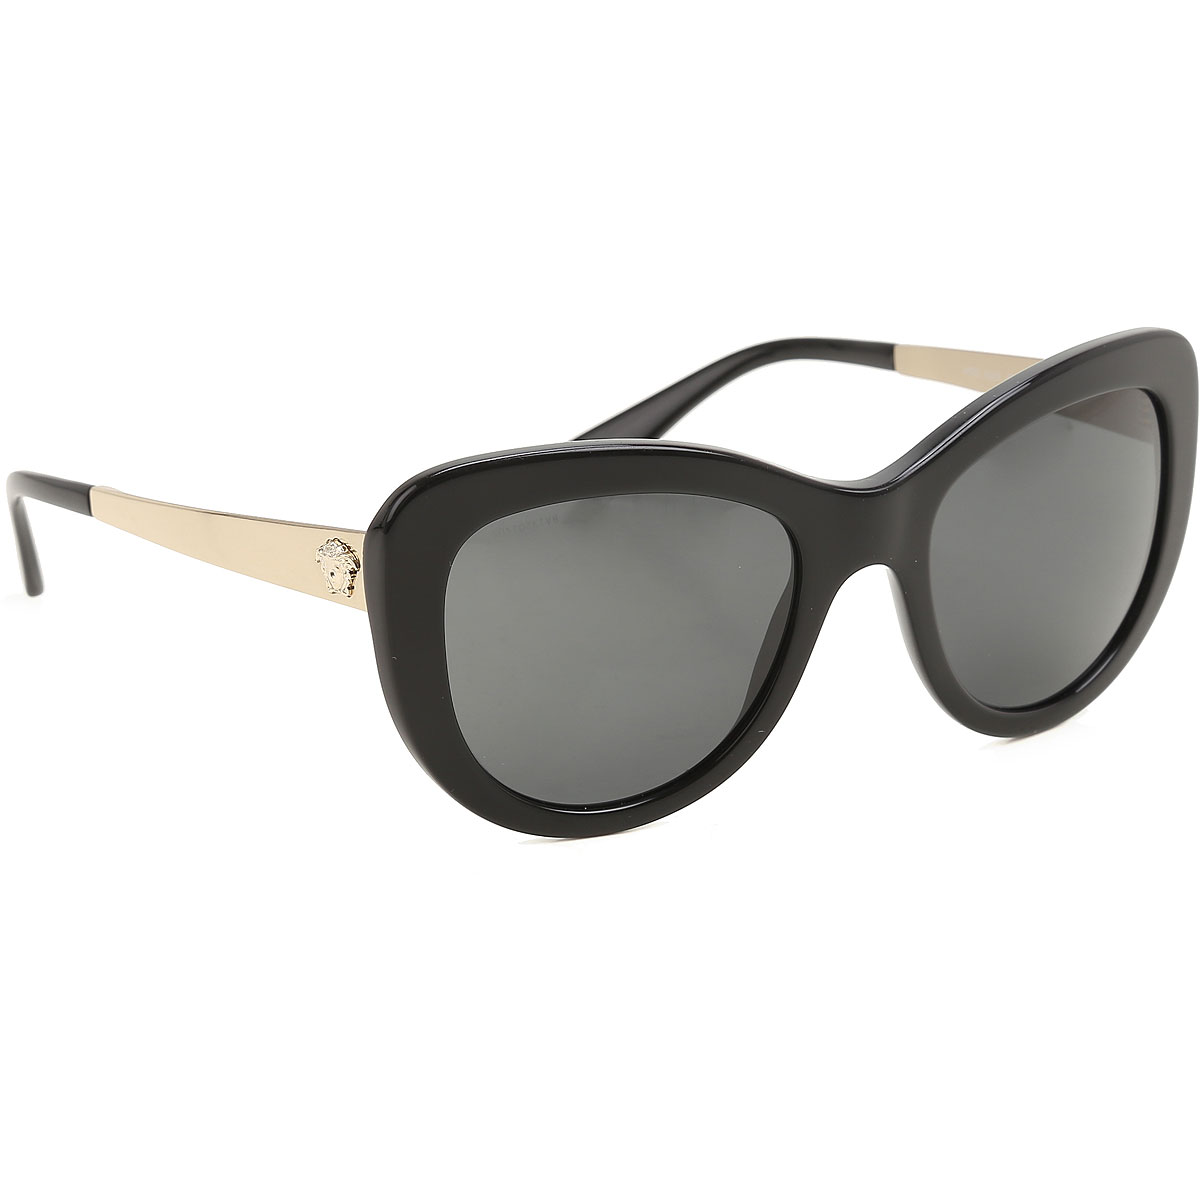 Sunglasses Gianni Versace, Style code: ve4325-gb1-87